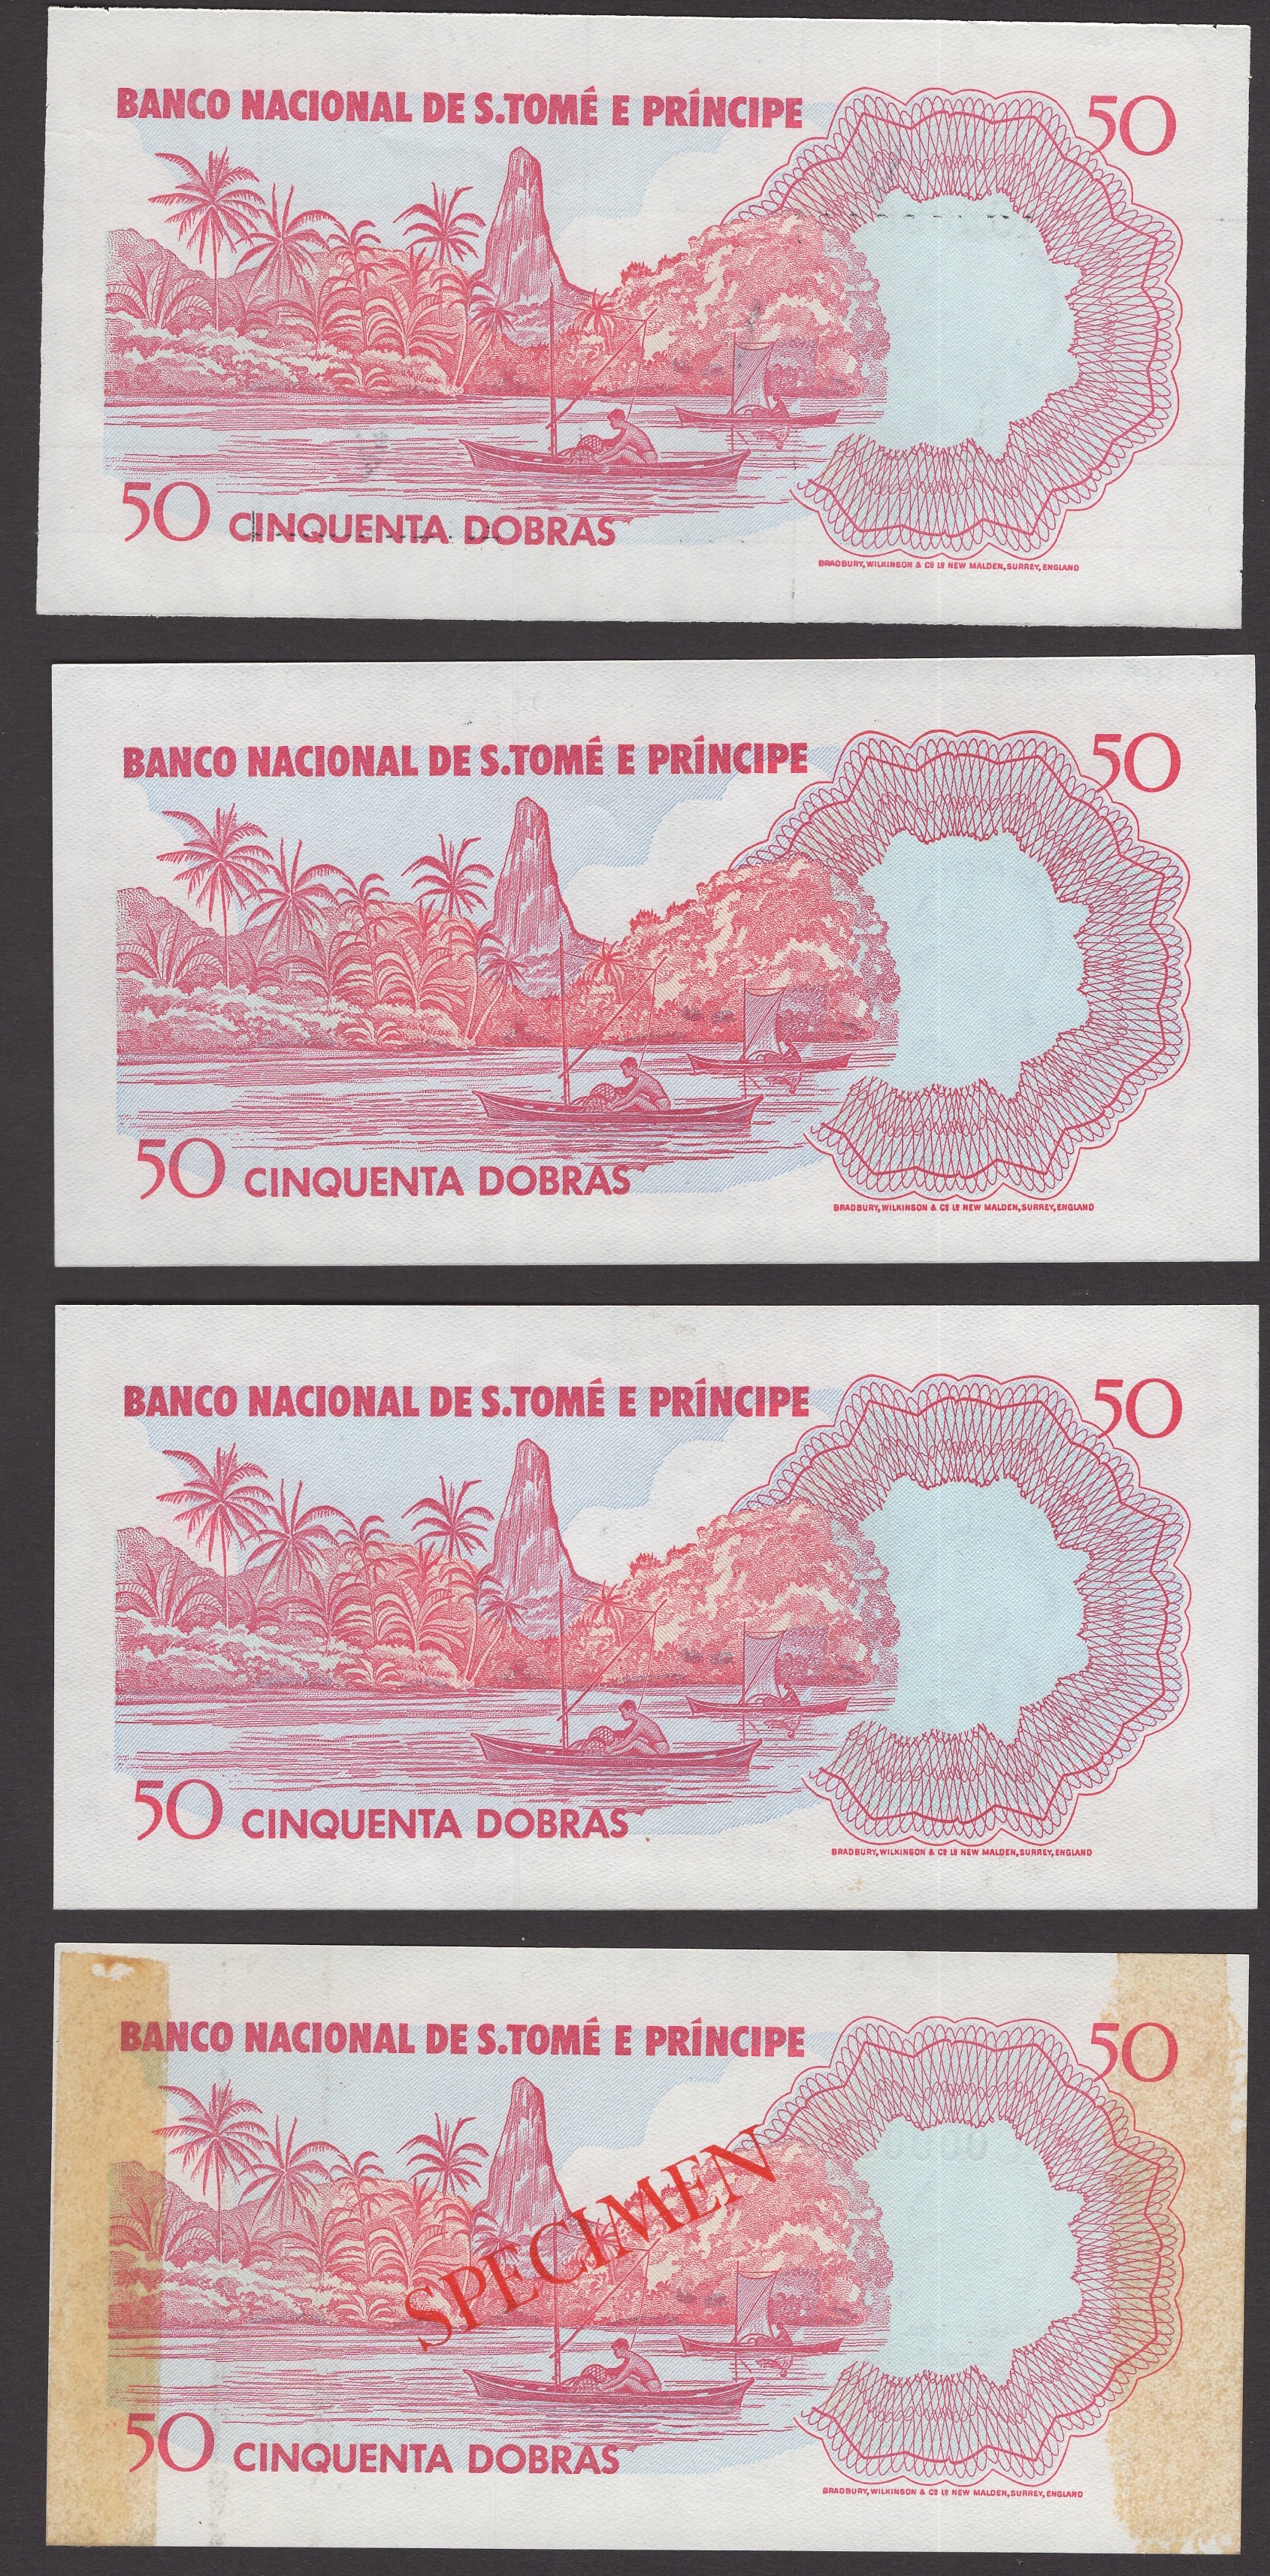 Banco Nacional de S.Tome e Principe, a group of proofs (4) and photographs (6) for the... - Image 2 of 6